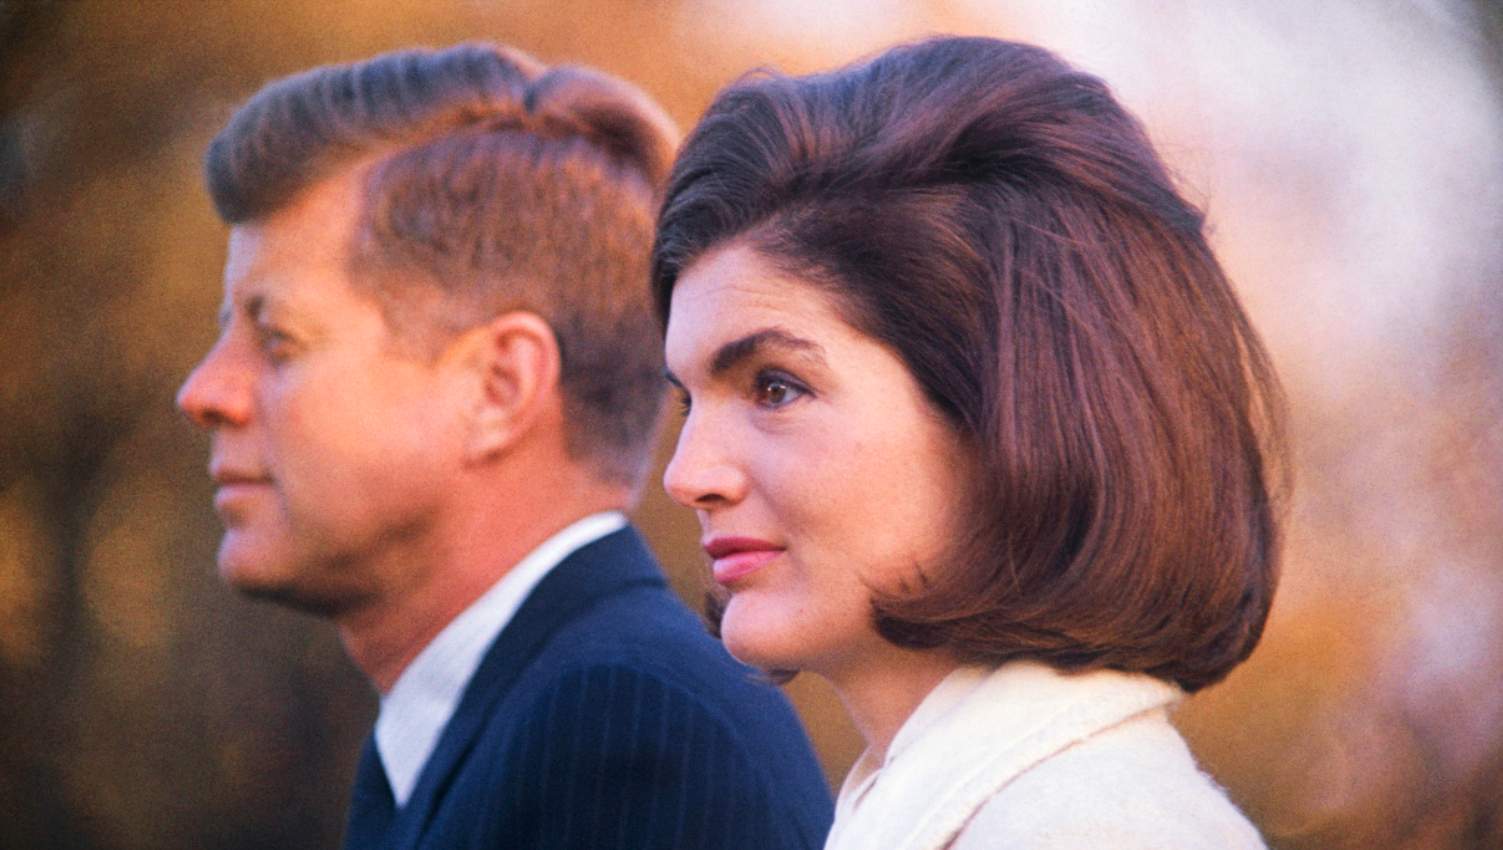 JFK and Jackie Kennedy